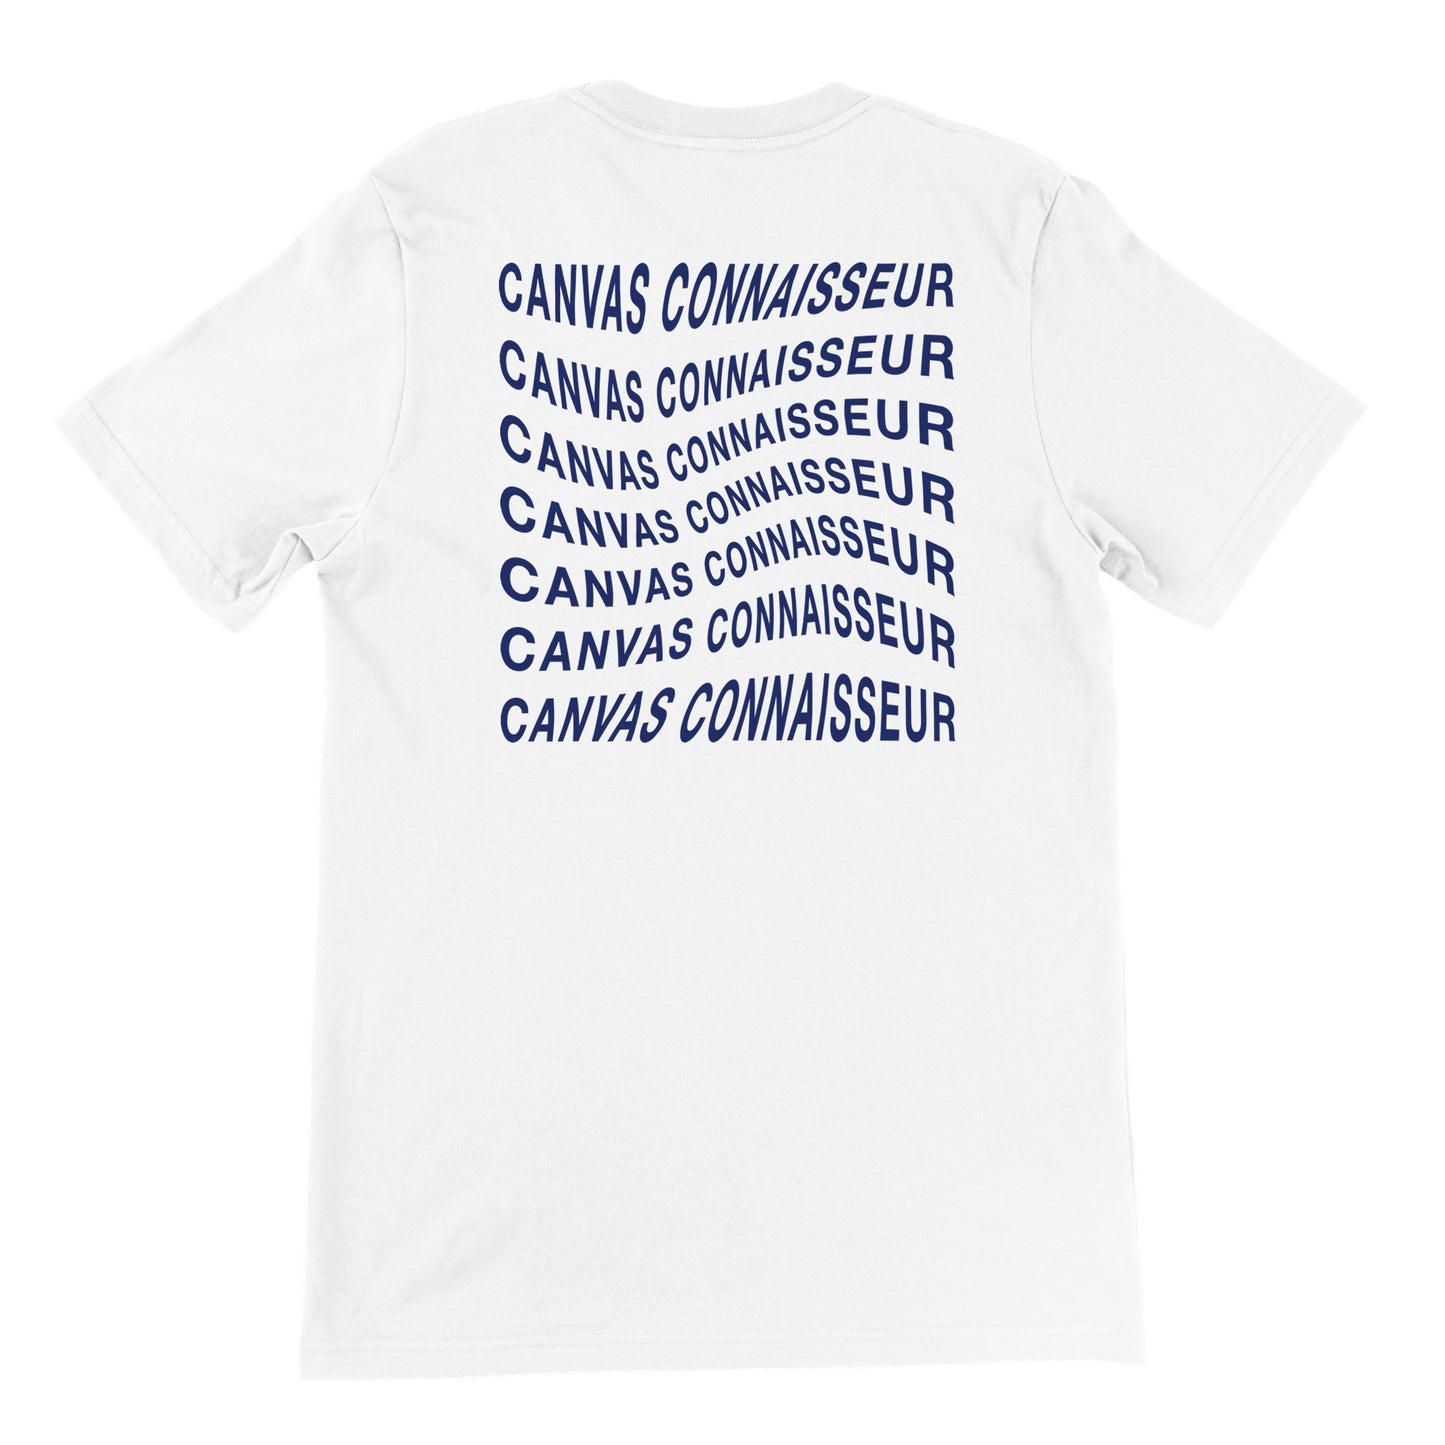 CANVAS CONNAISSEUR / T-shirt / white